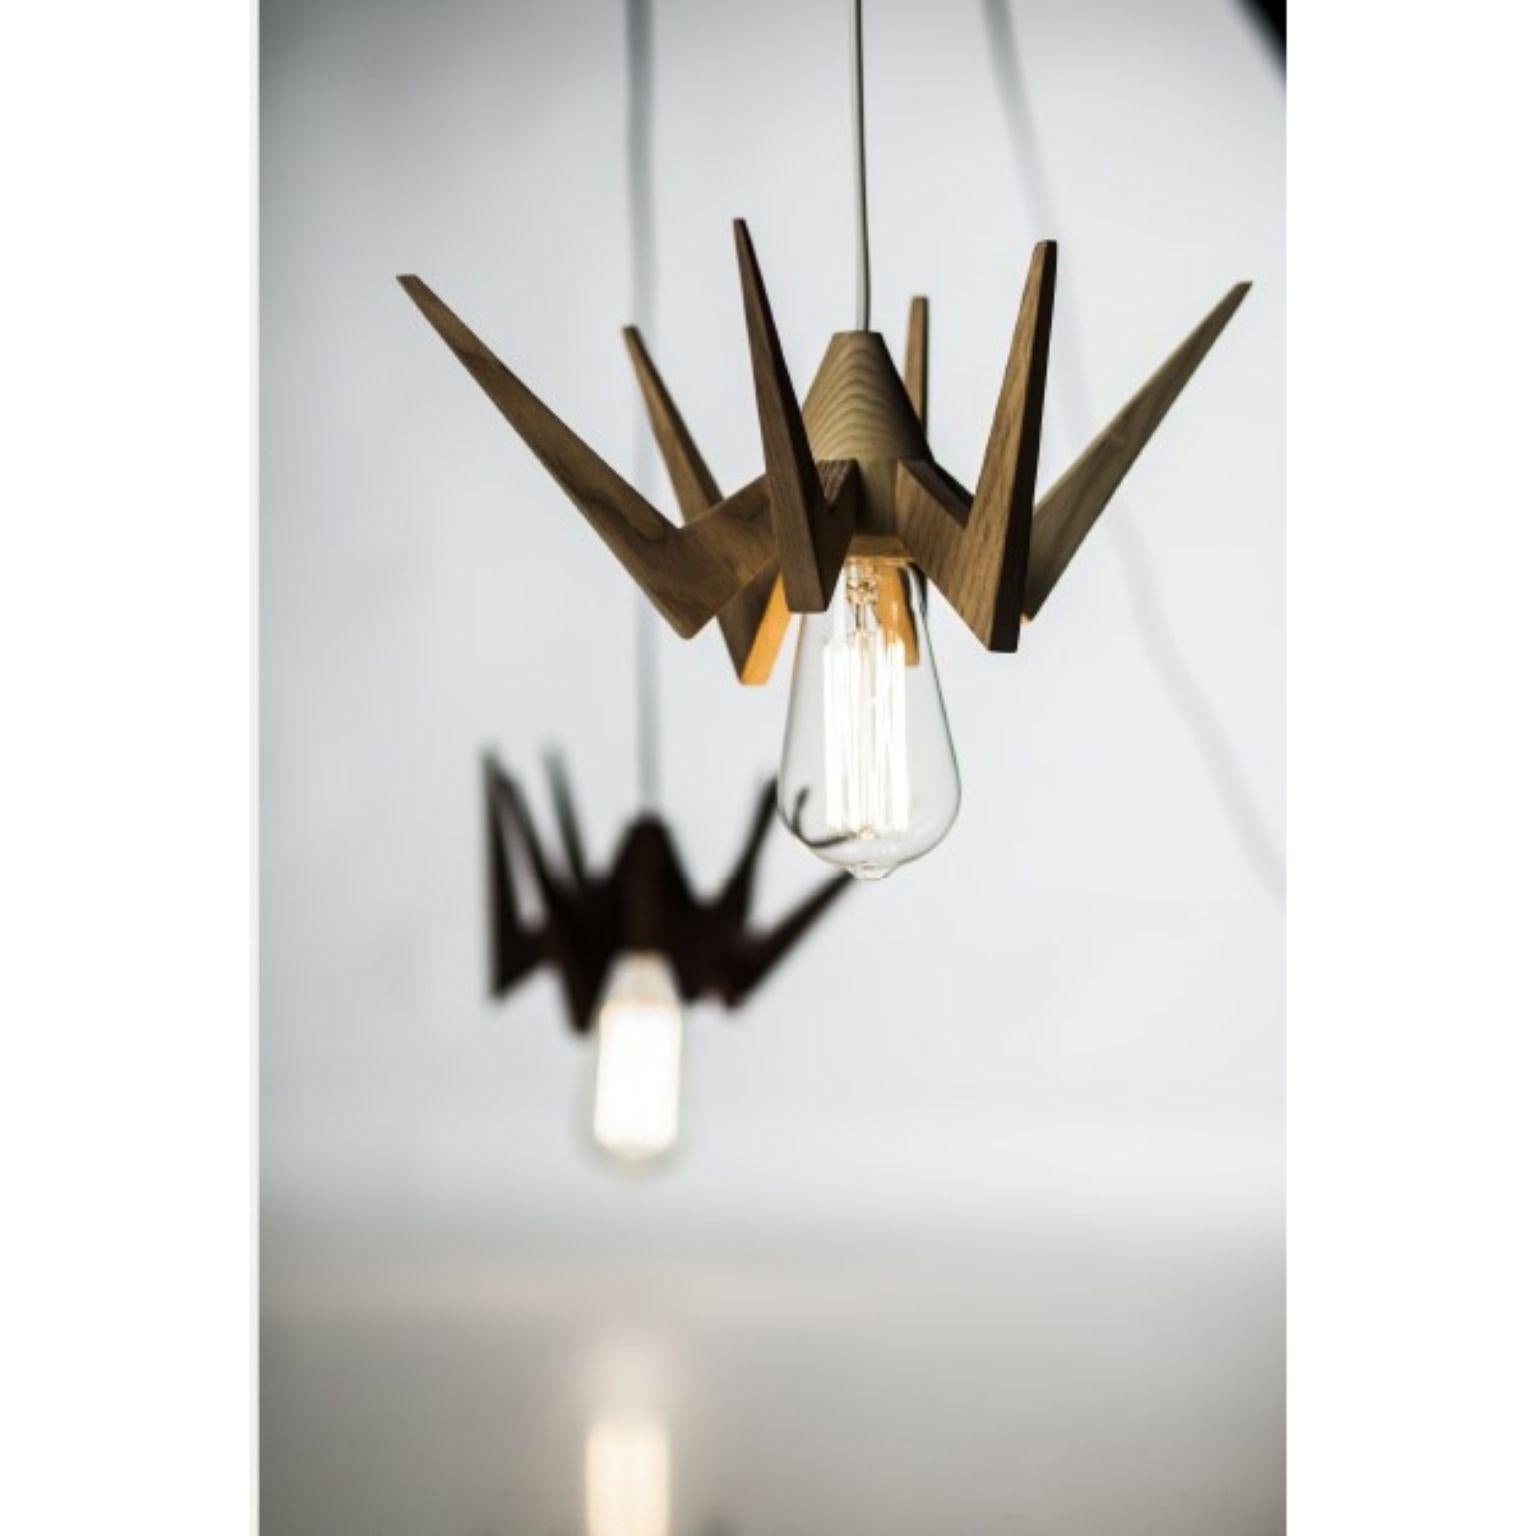 Portuguese Spider Lamp by Alexandre Caldas